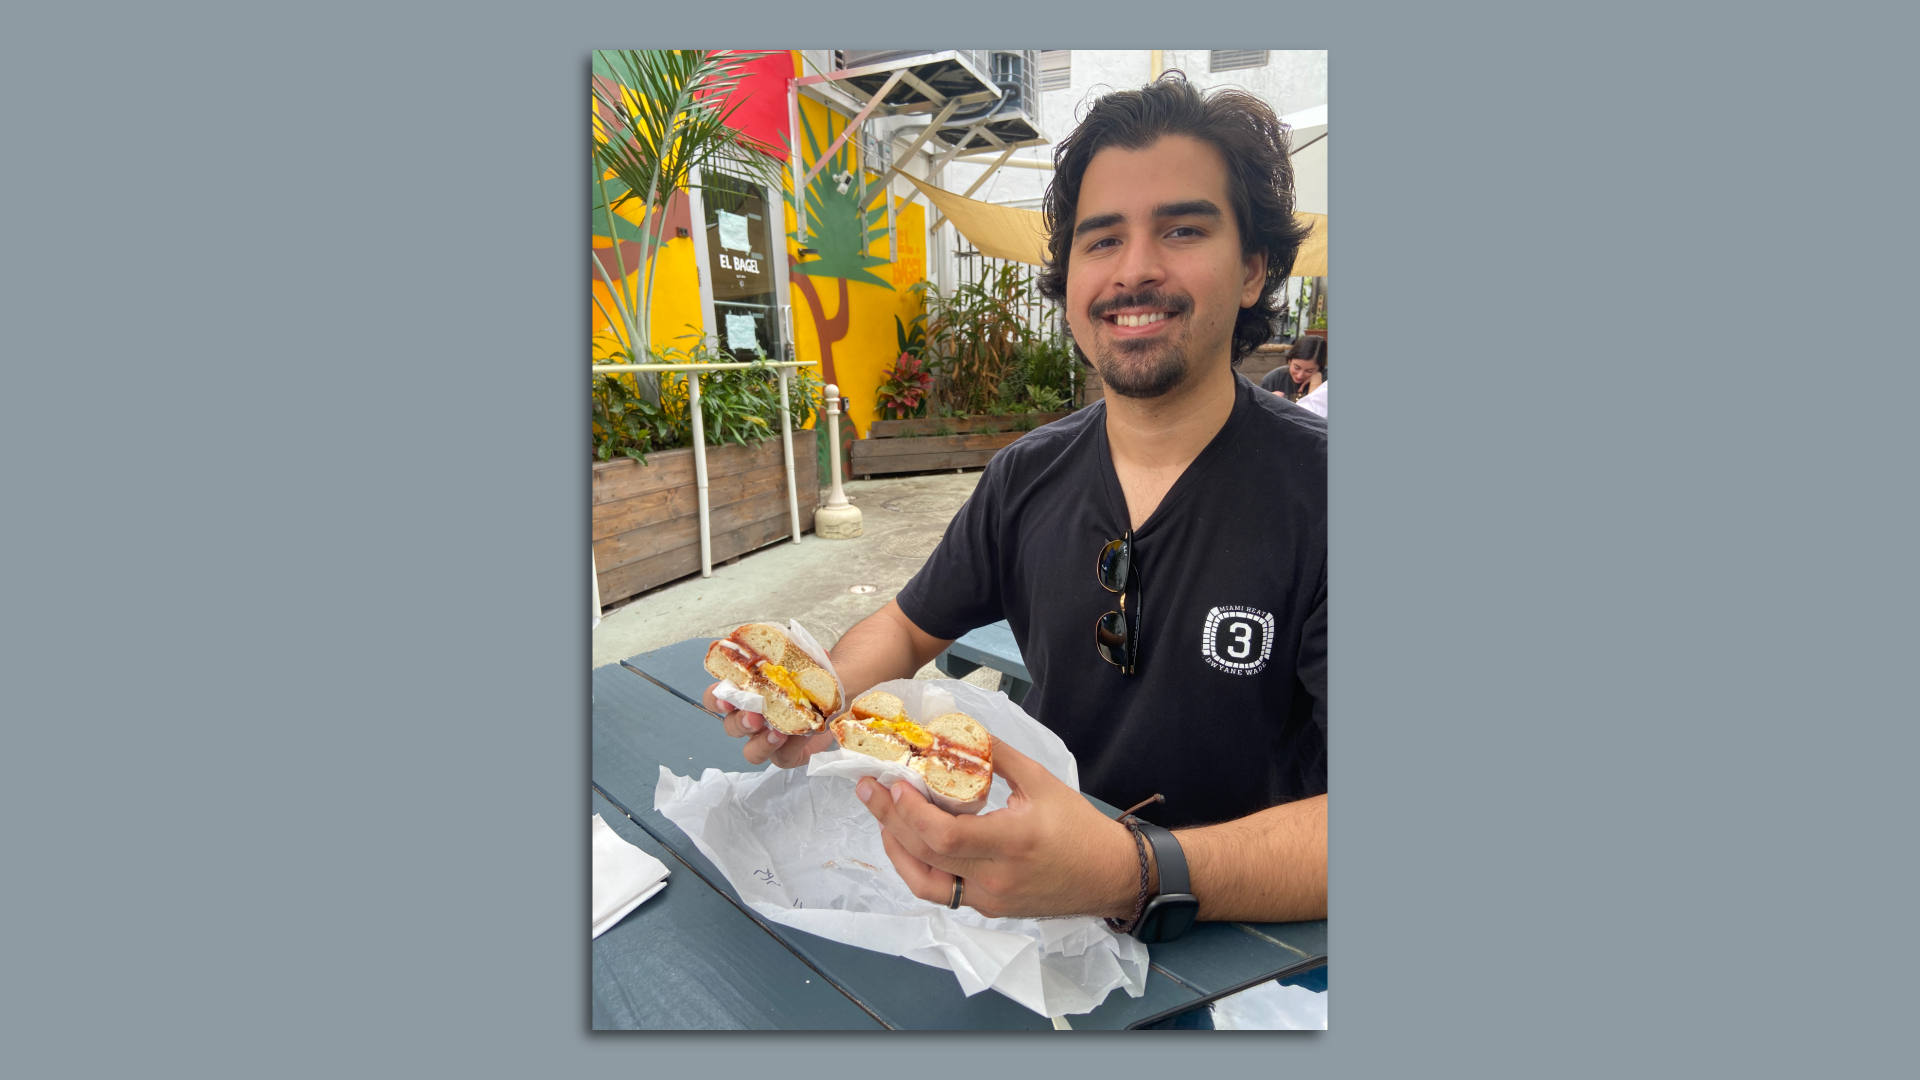 Martin Vassolo posing with an El Bagel sandwich. 